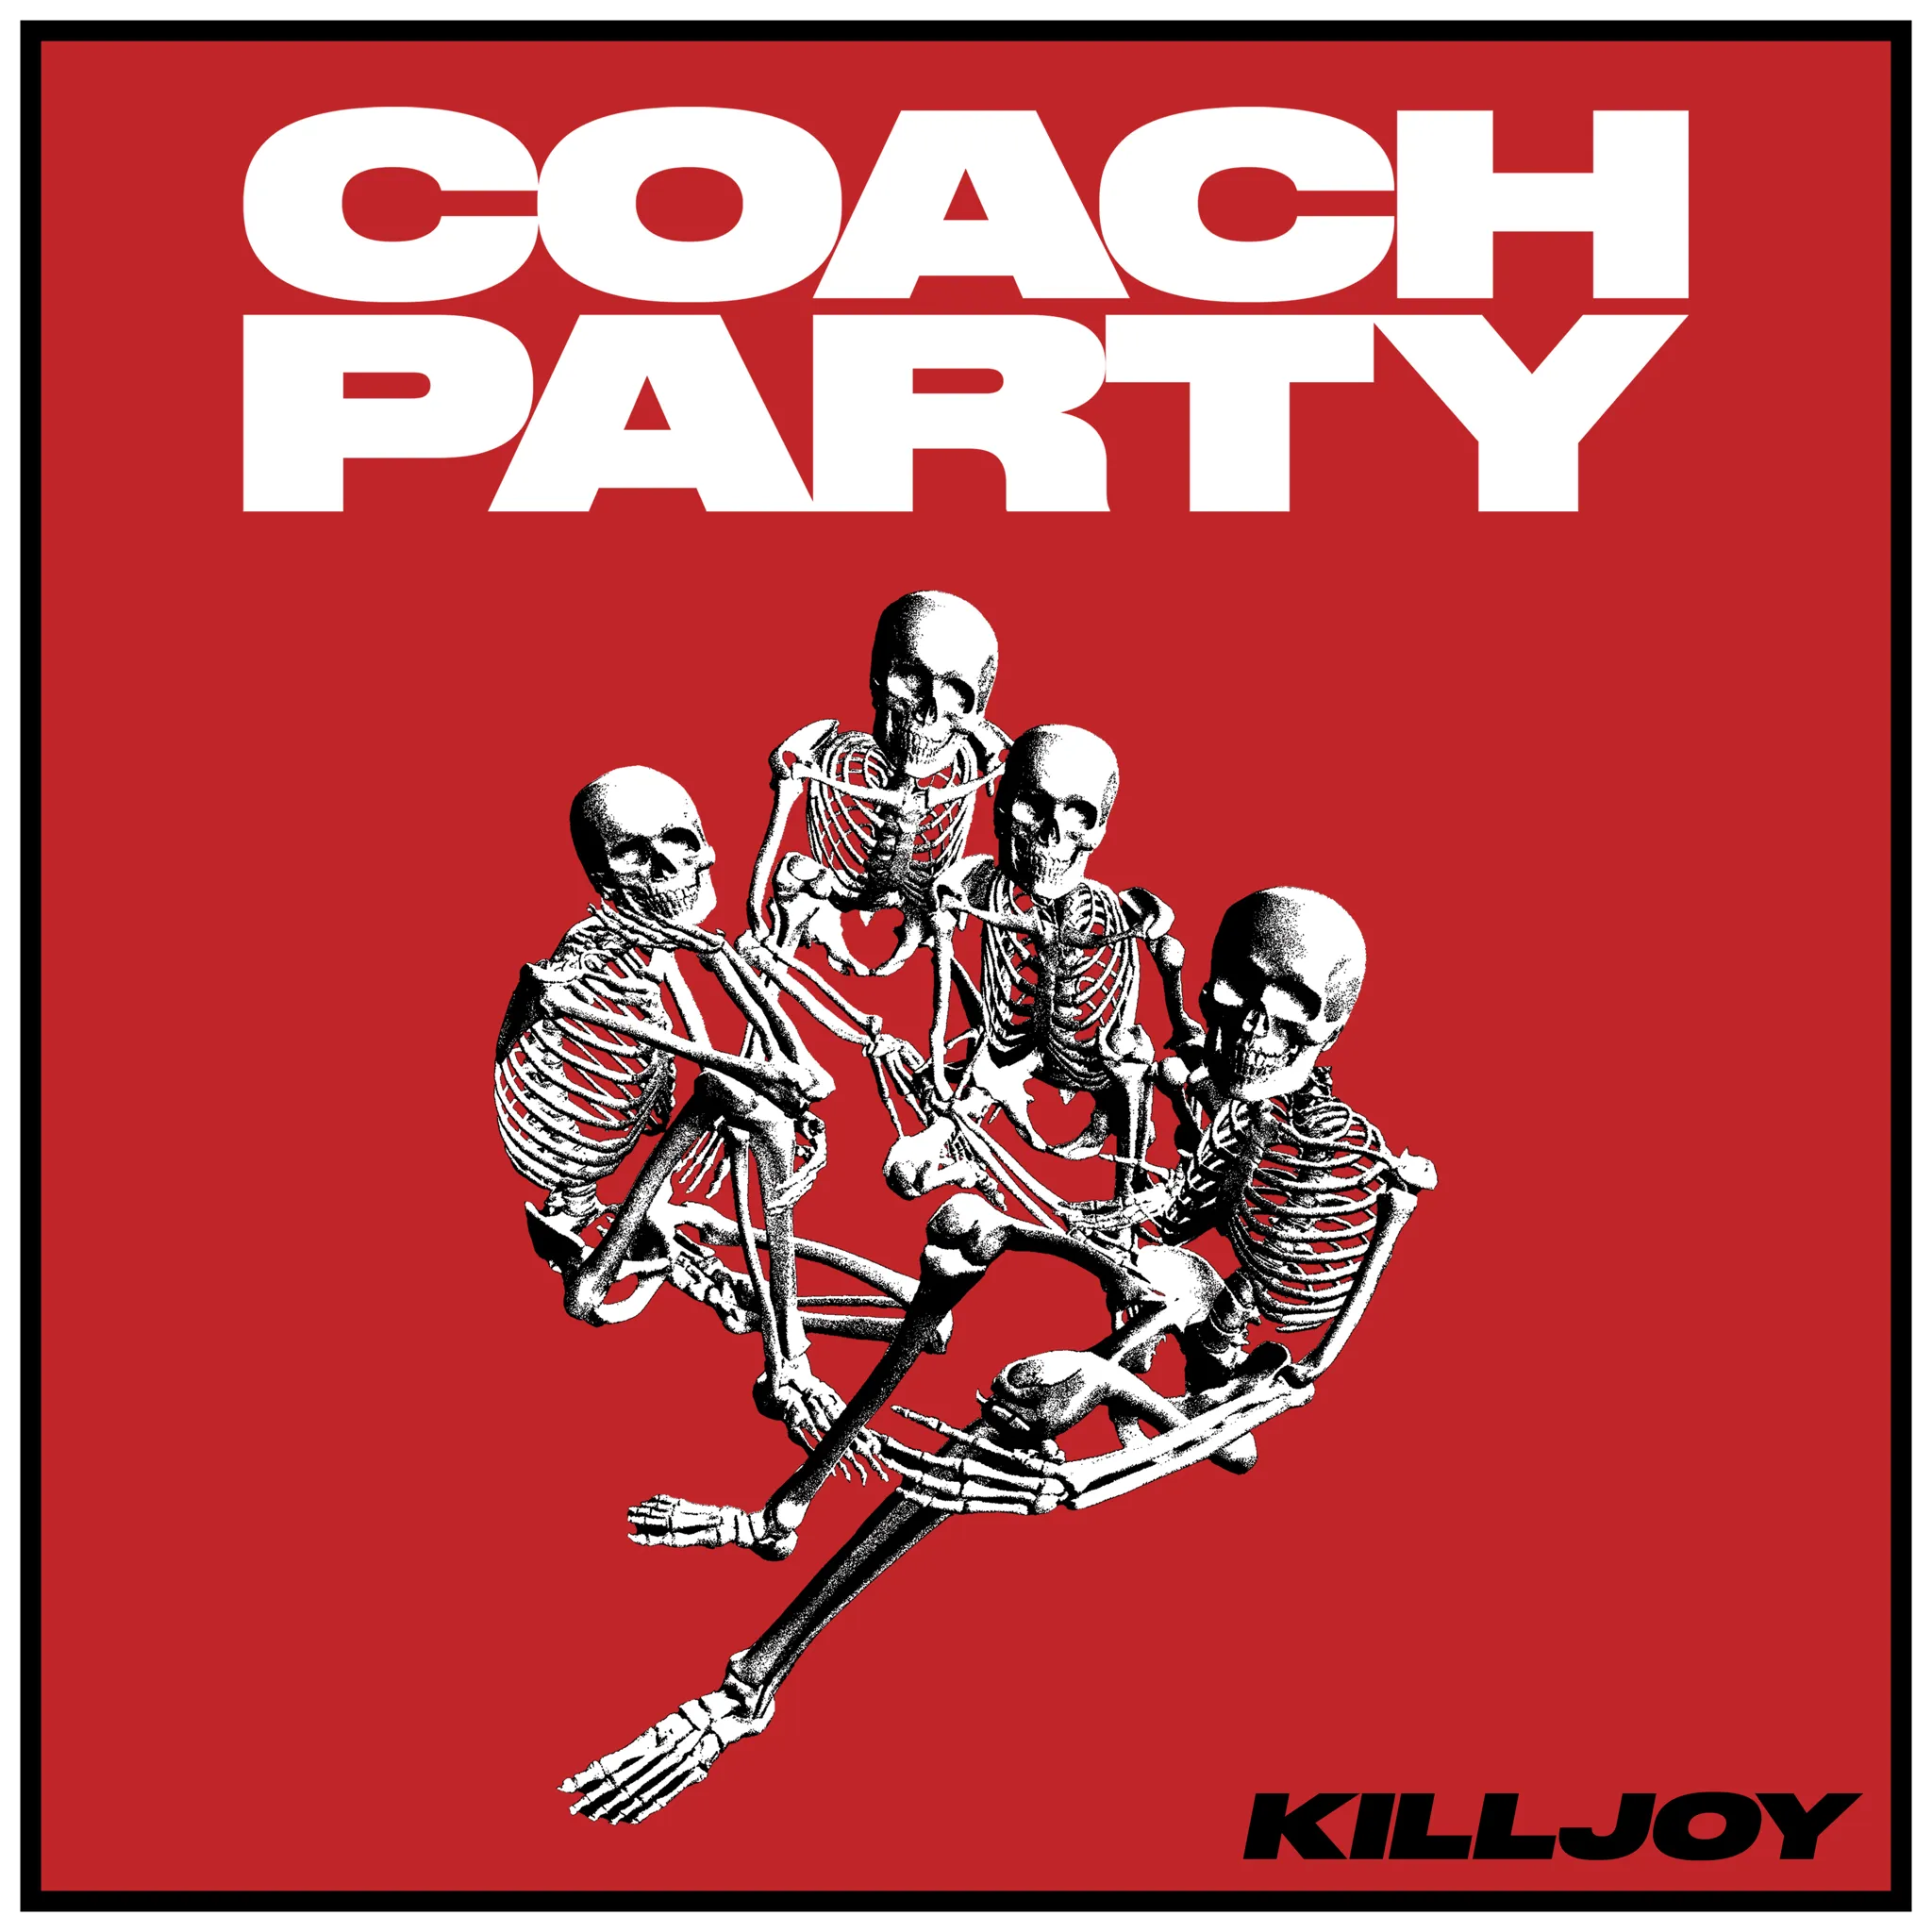 Coach Party - Killjoy artwork